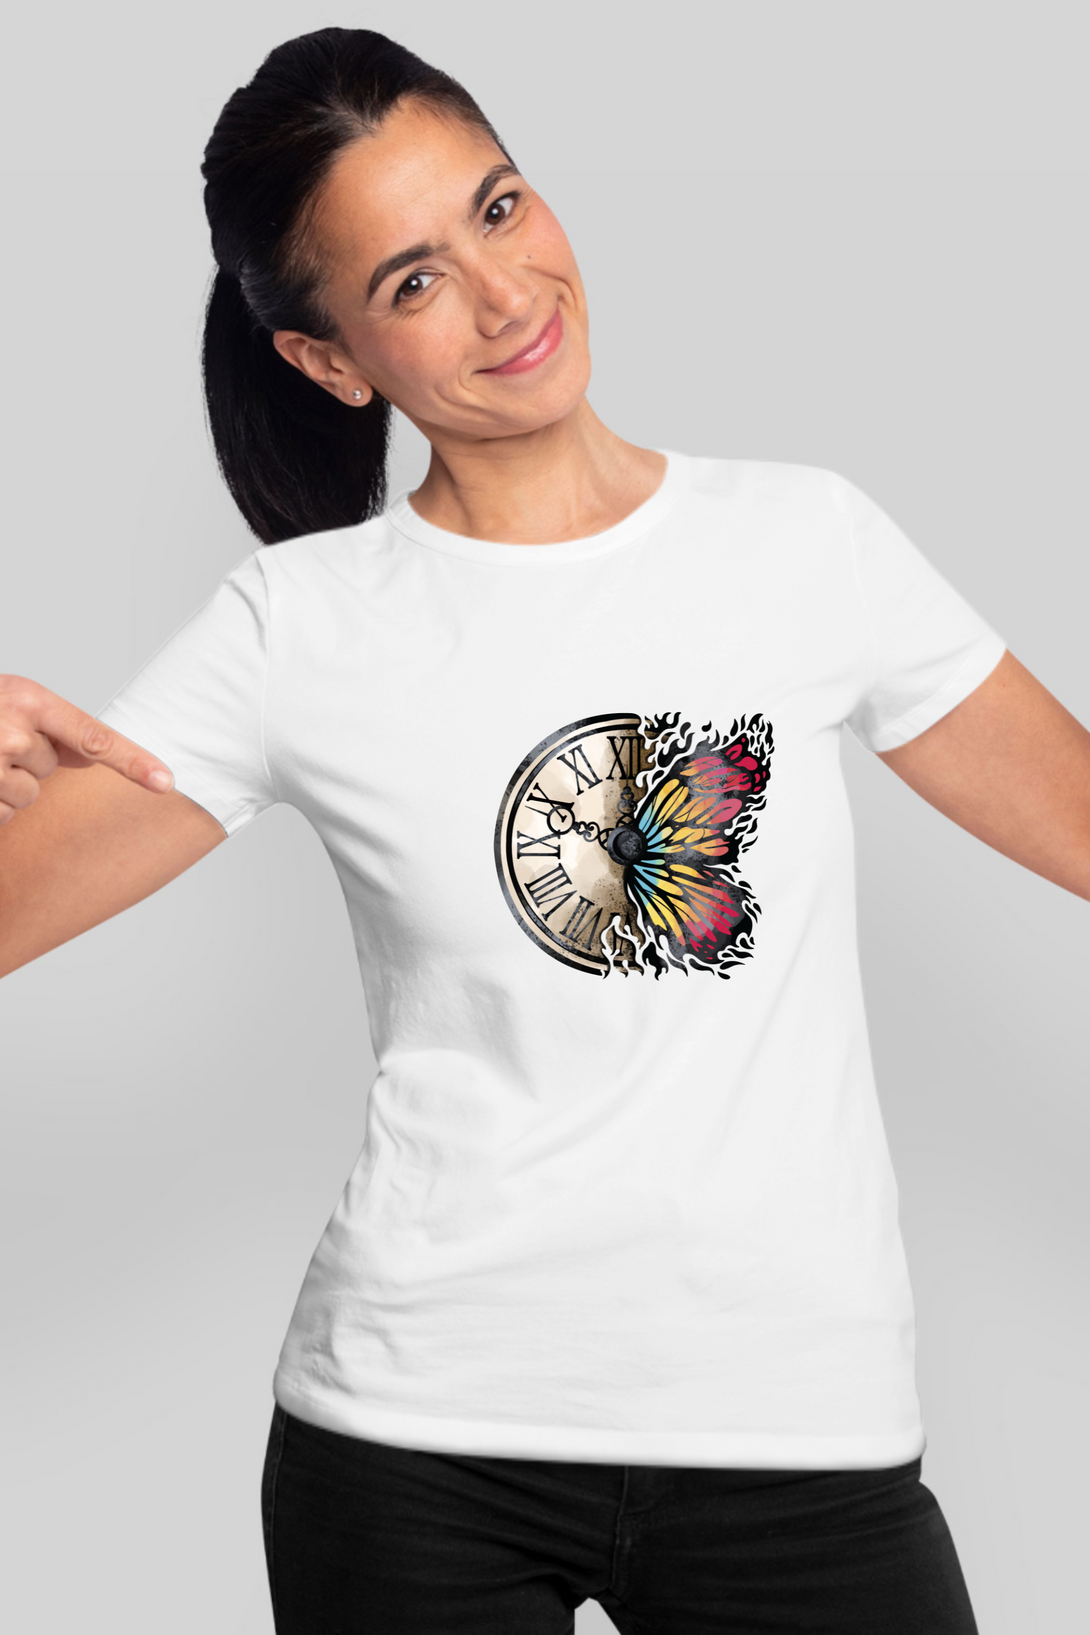 Vintage Clock Printed T-Shirt For Women - WowWaves - 7